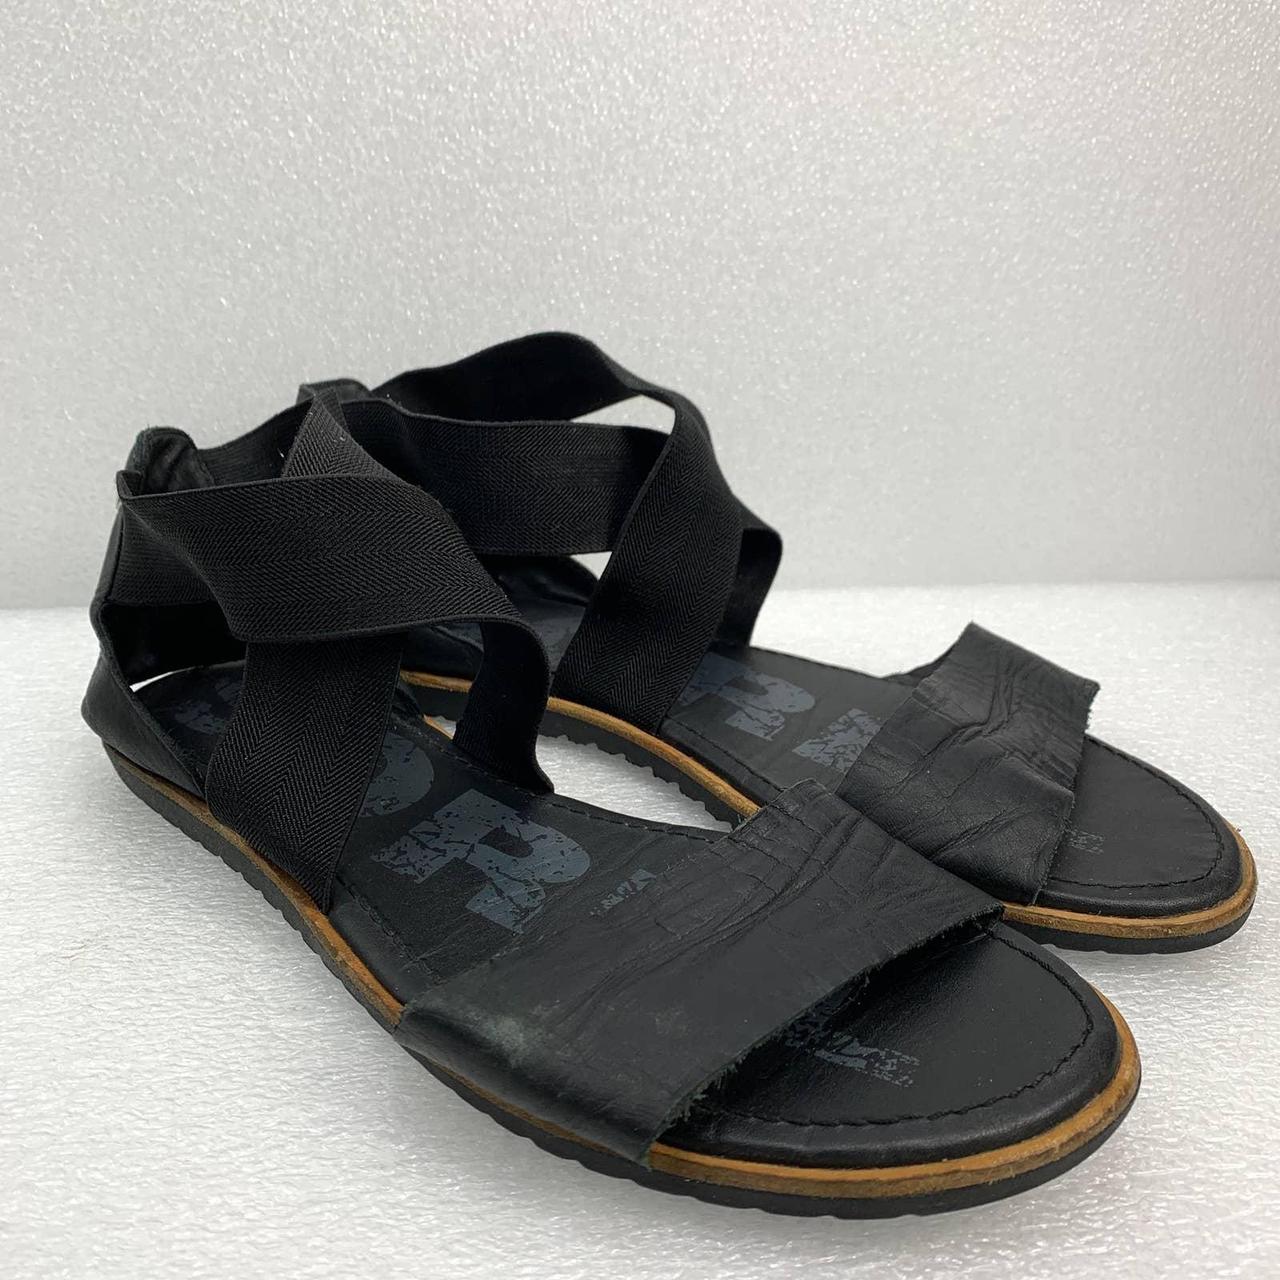 Sorel Women's Black and Tan Sandals